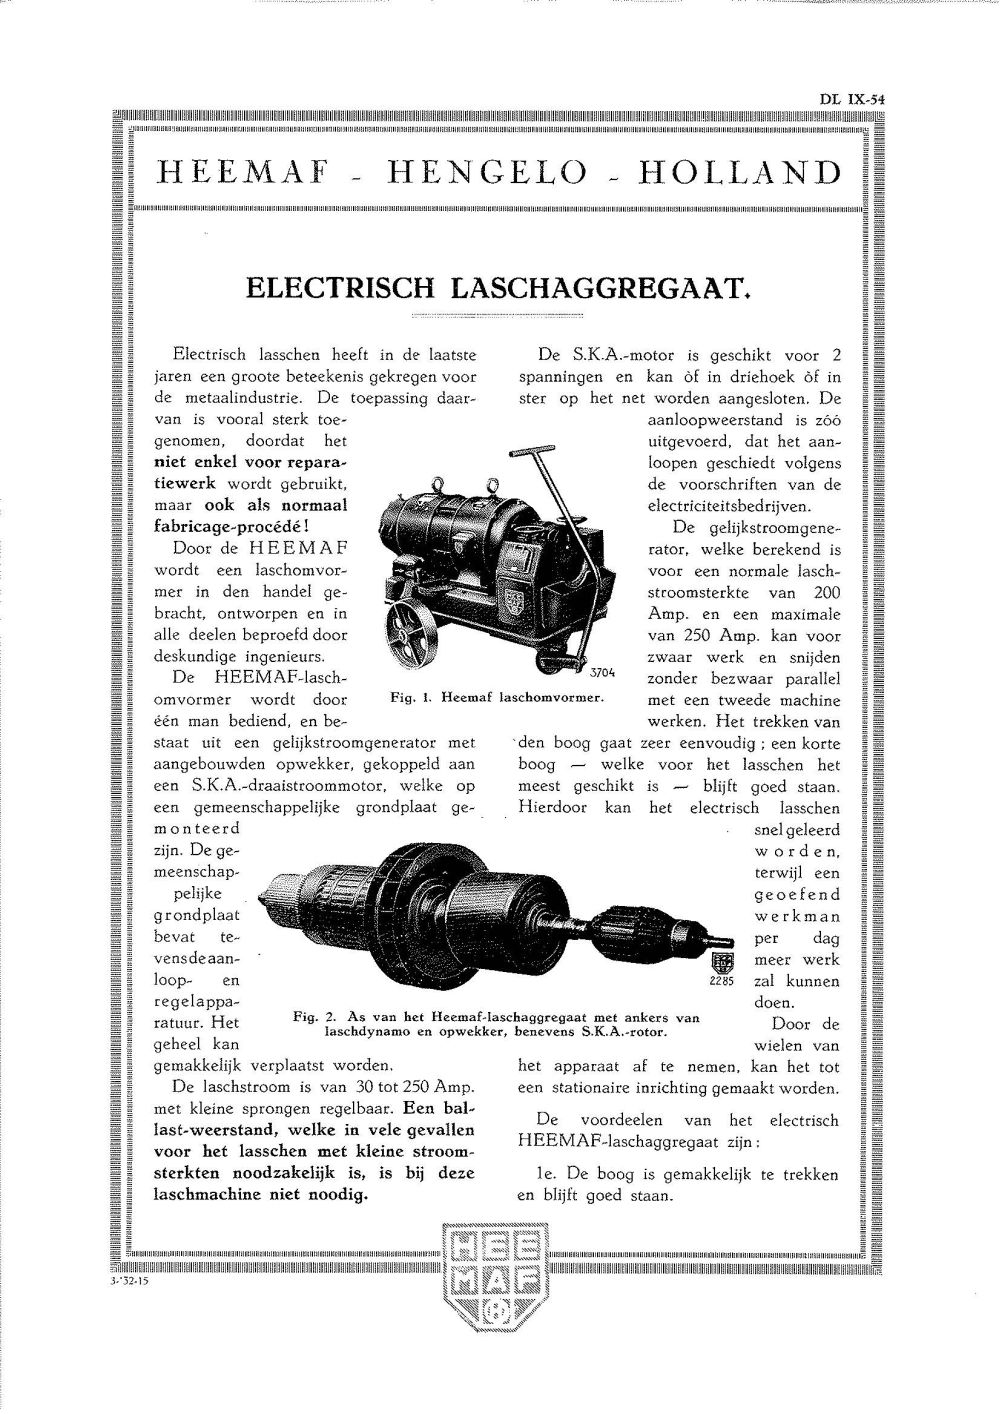 LasagregaatHeemaf Pagina8-small-9-5-1932